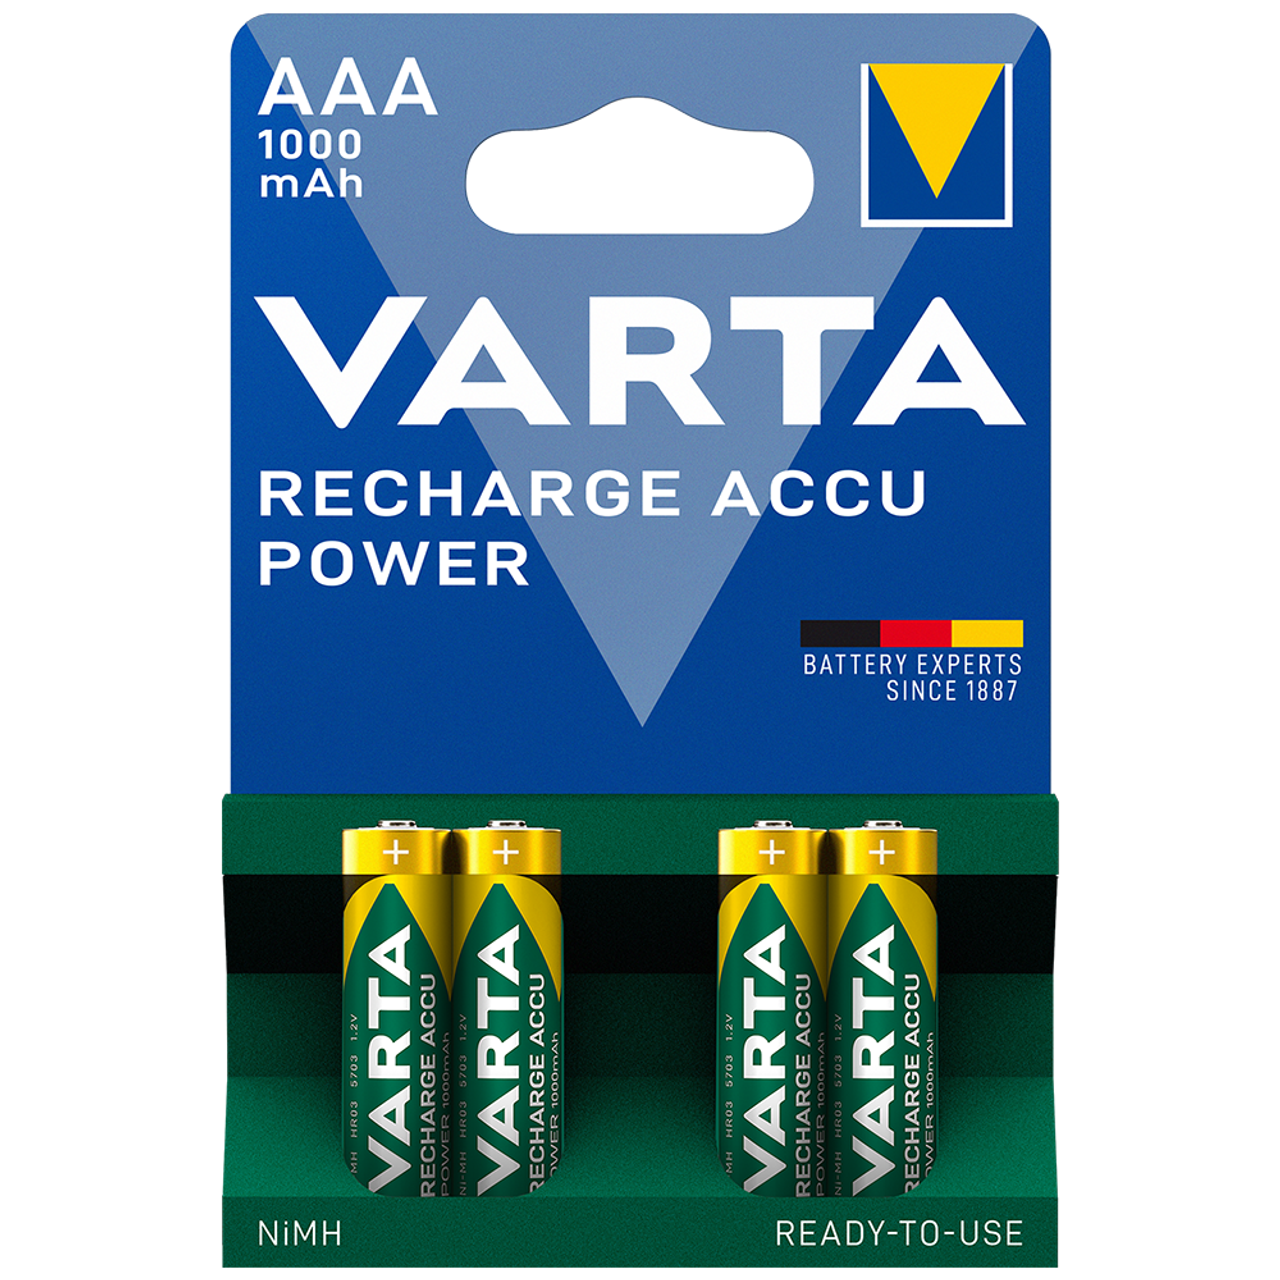 Varta AAA 1000mAh rechargeable (HR03) chez pilesAUDITIVES.nl achêter -  pilesAUDITIVES.nl